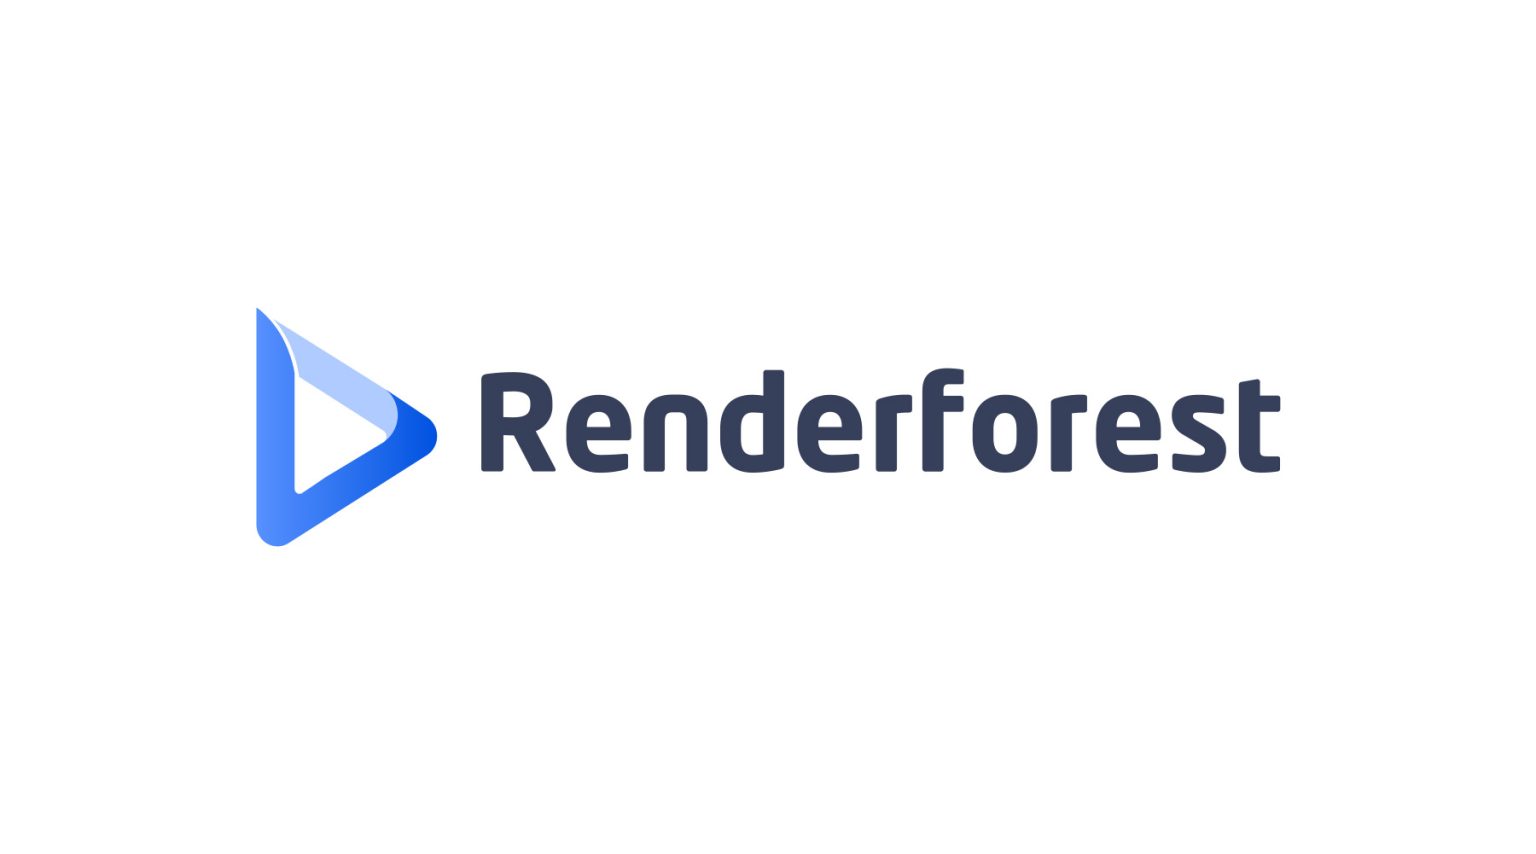 renderforest logo2 1536x854 - Renderforest Mod Apk V2.9.3 (Premium Unlocked) Latest Version